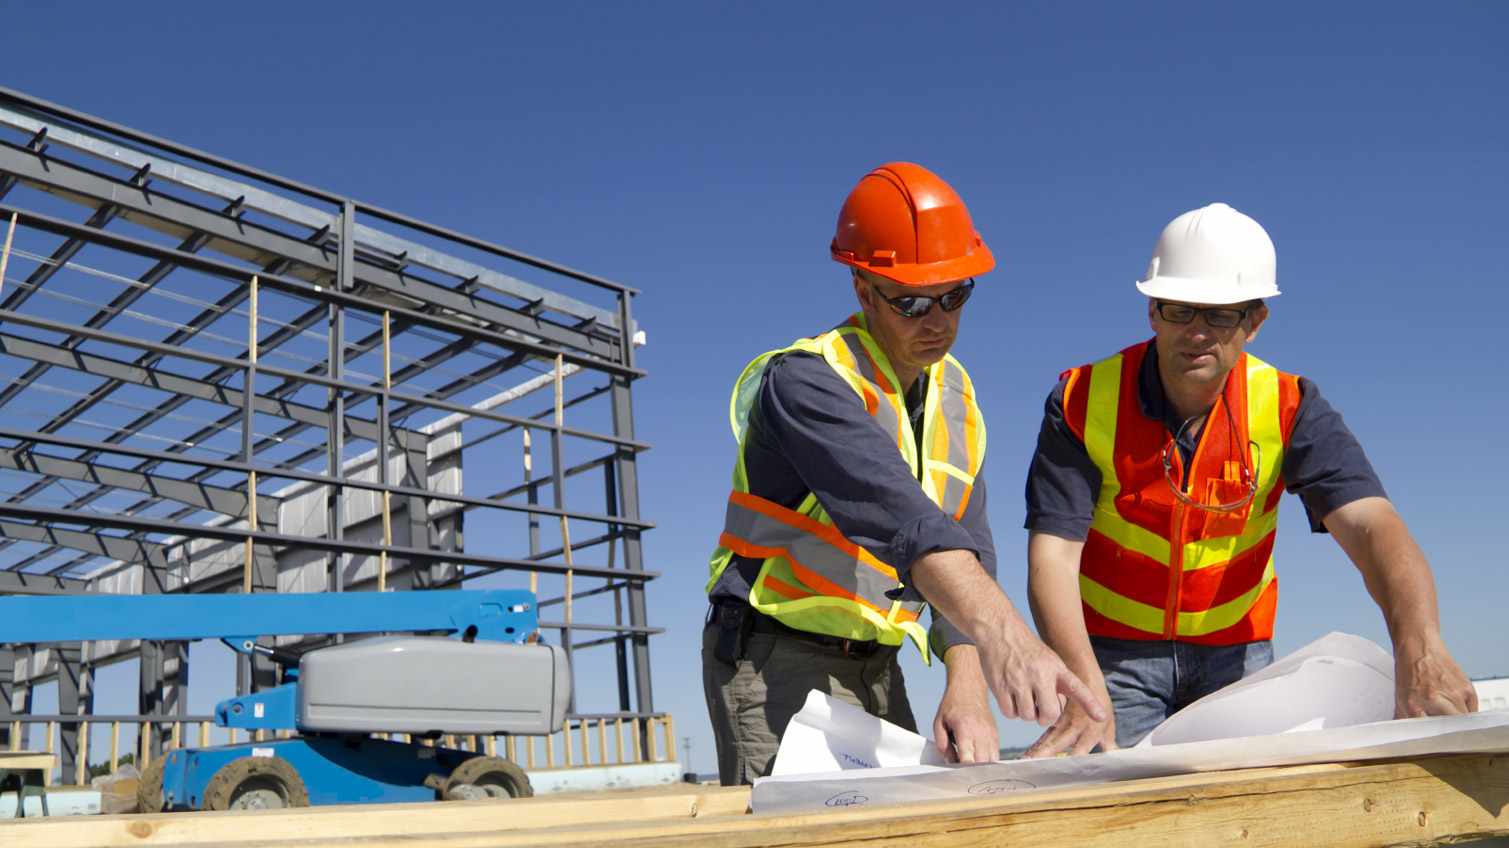 Construction Management Fundamentals